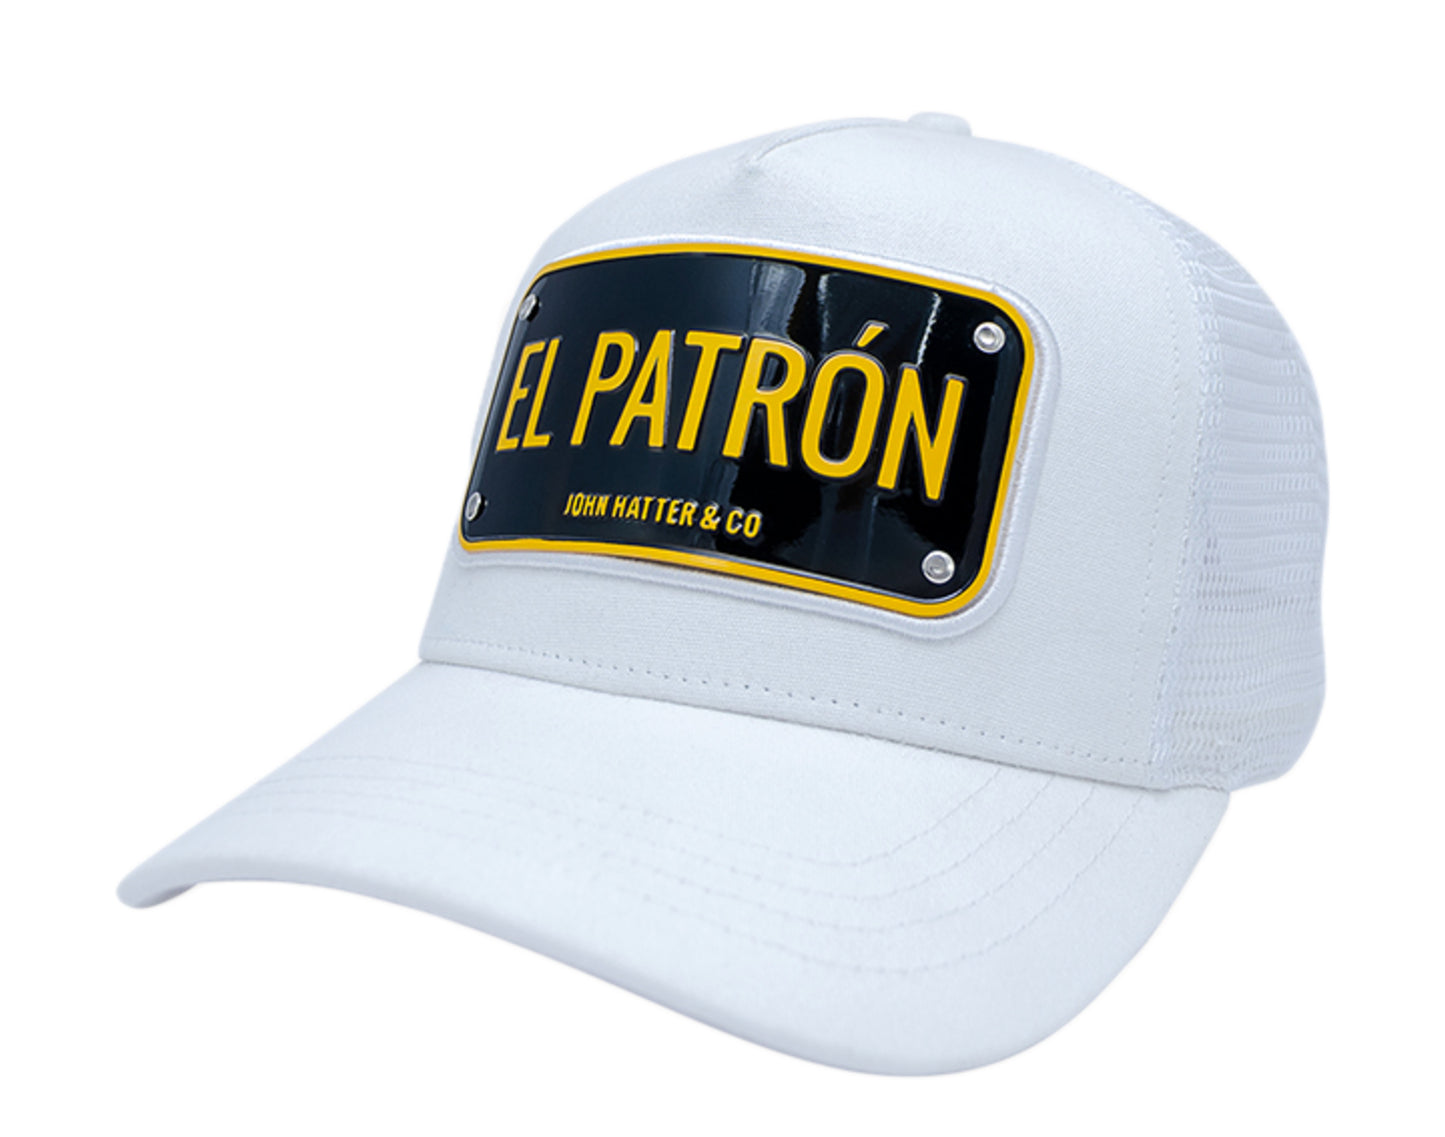 John Hatter & Co El Patron White/Black/Yellow Trucker Hat 1003-WHITE